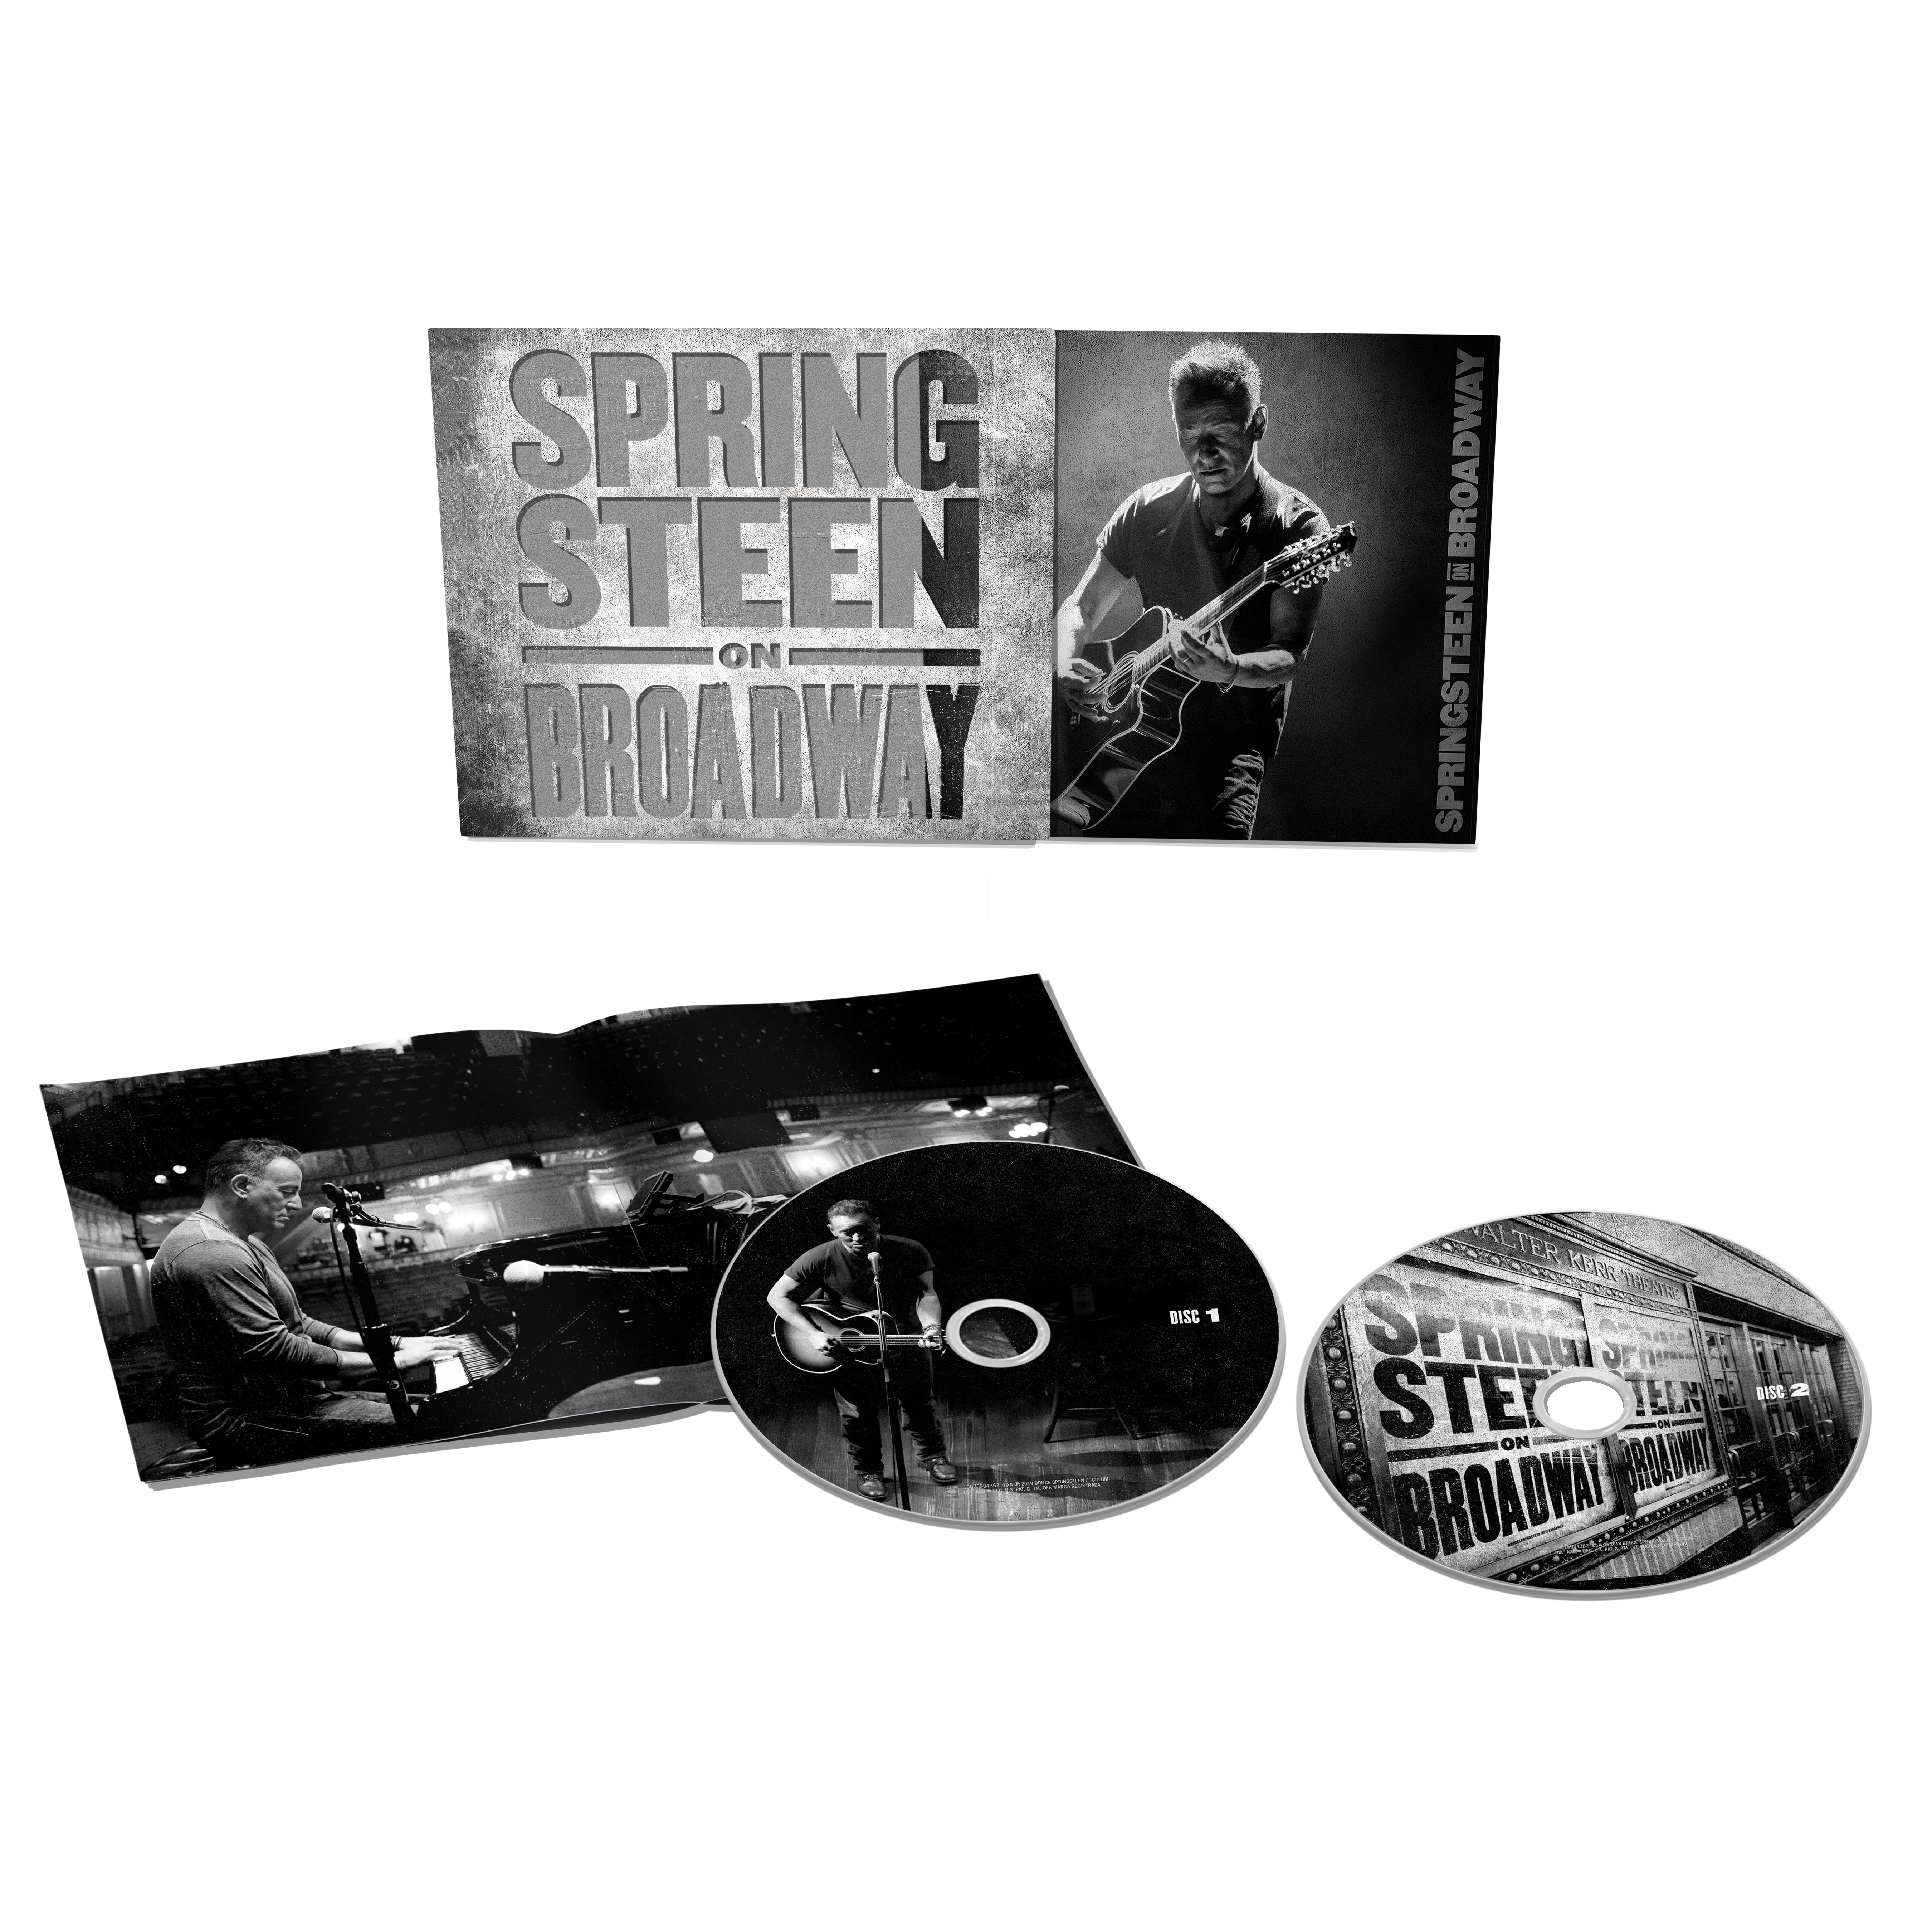 Bruce Springsteen Springsteen - (CD) on Broadway 